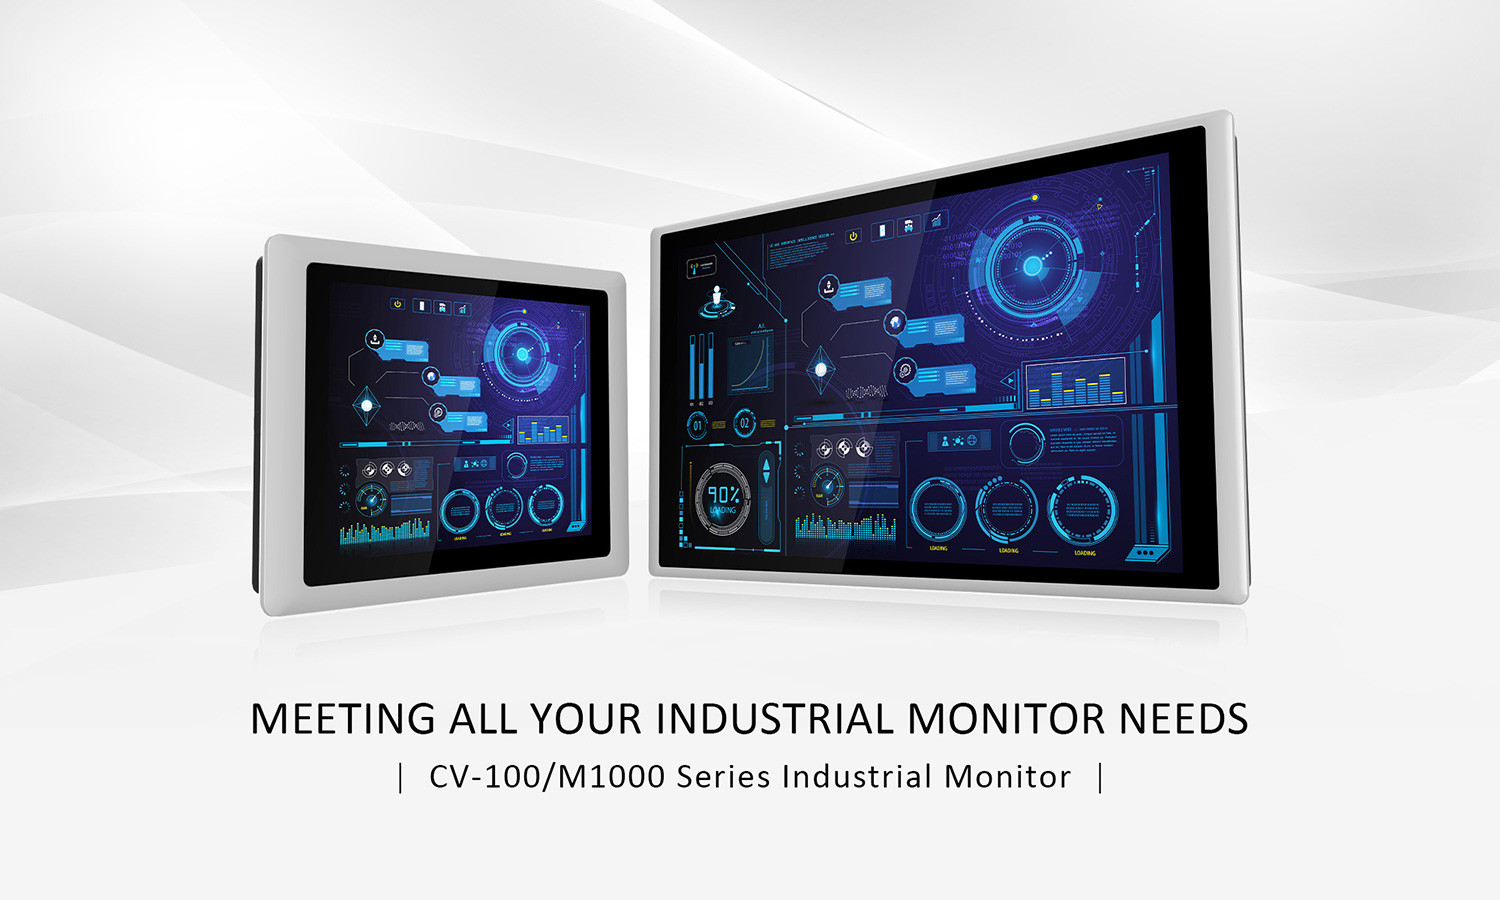 Industrial Monitor (CV-100/M1000 Series) | Industrial Monitor